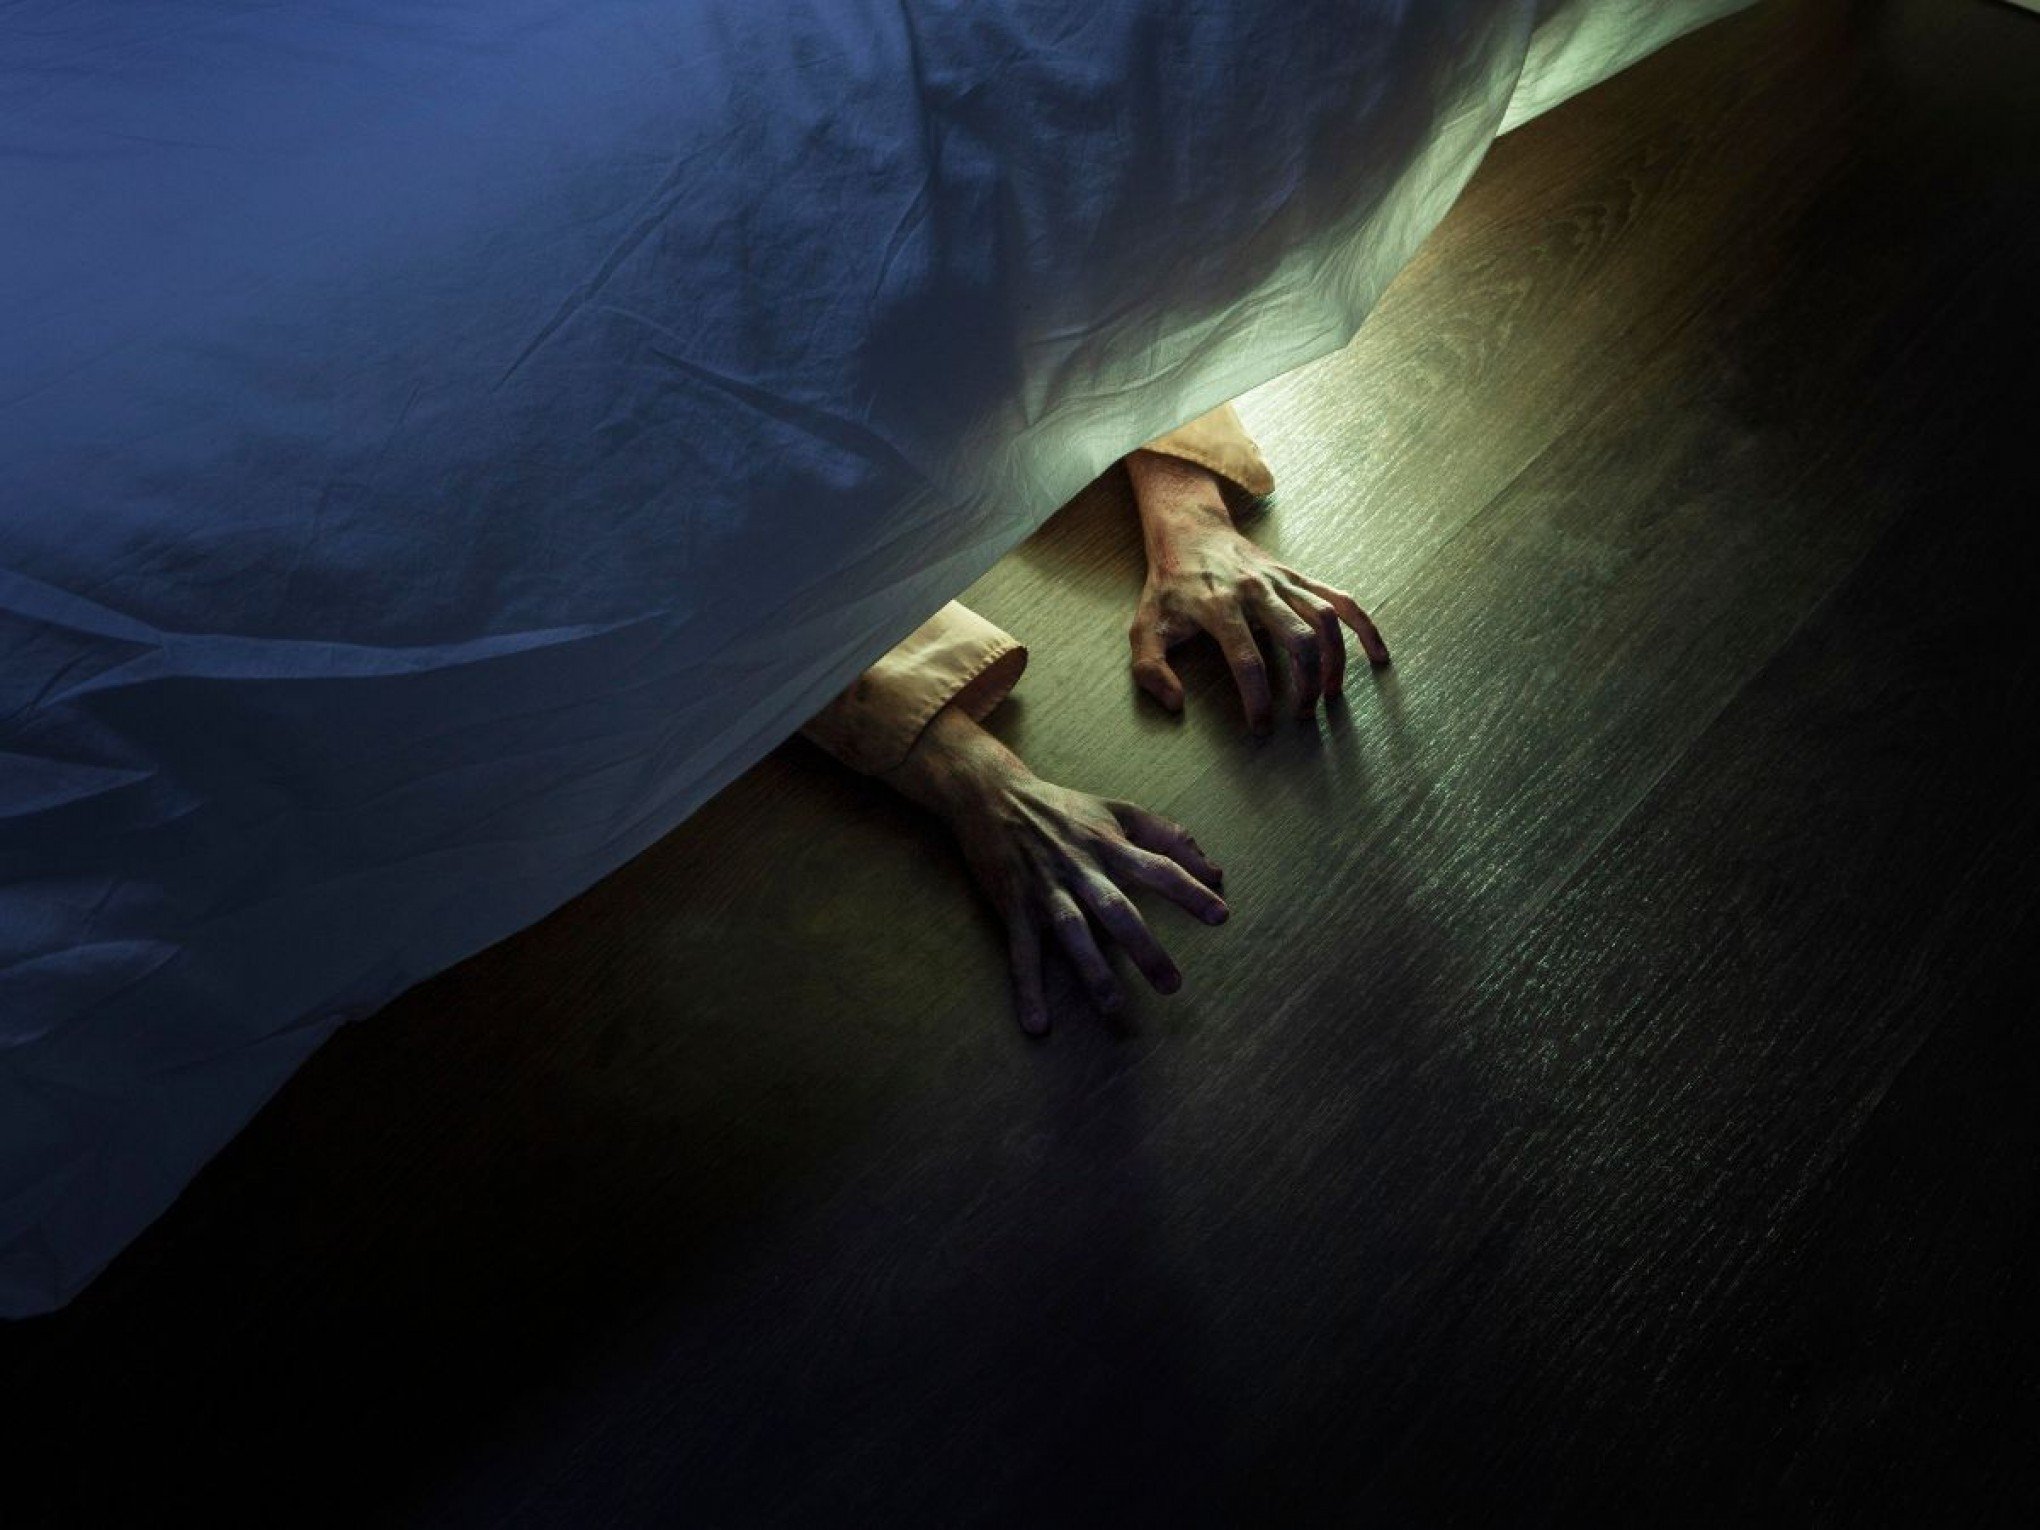 Brasileira descobre morador embaixo da própria cama